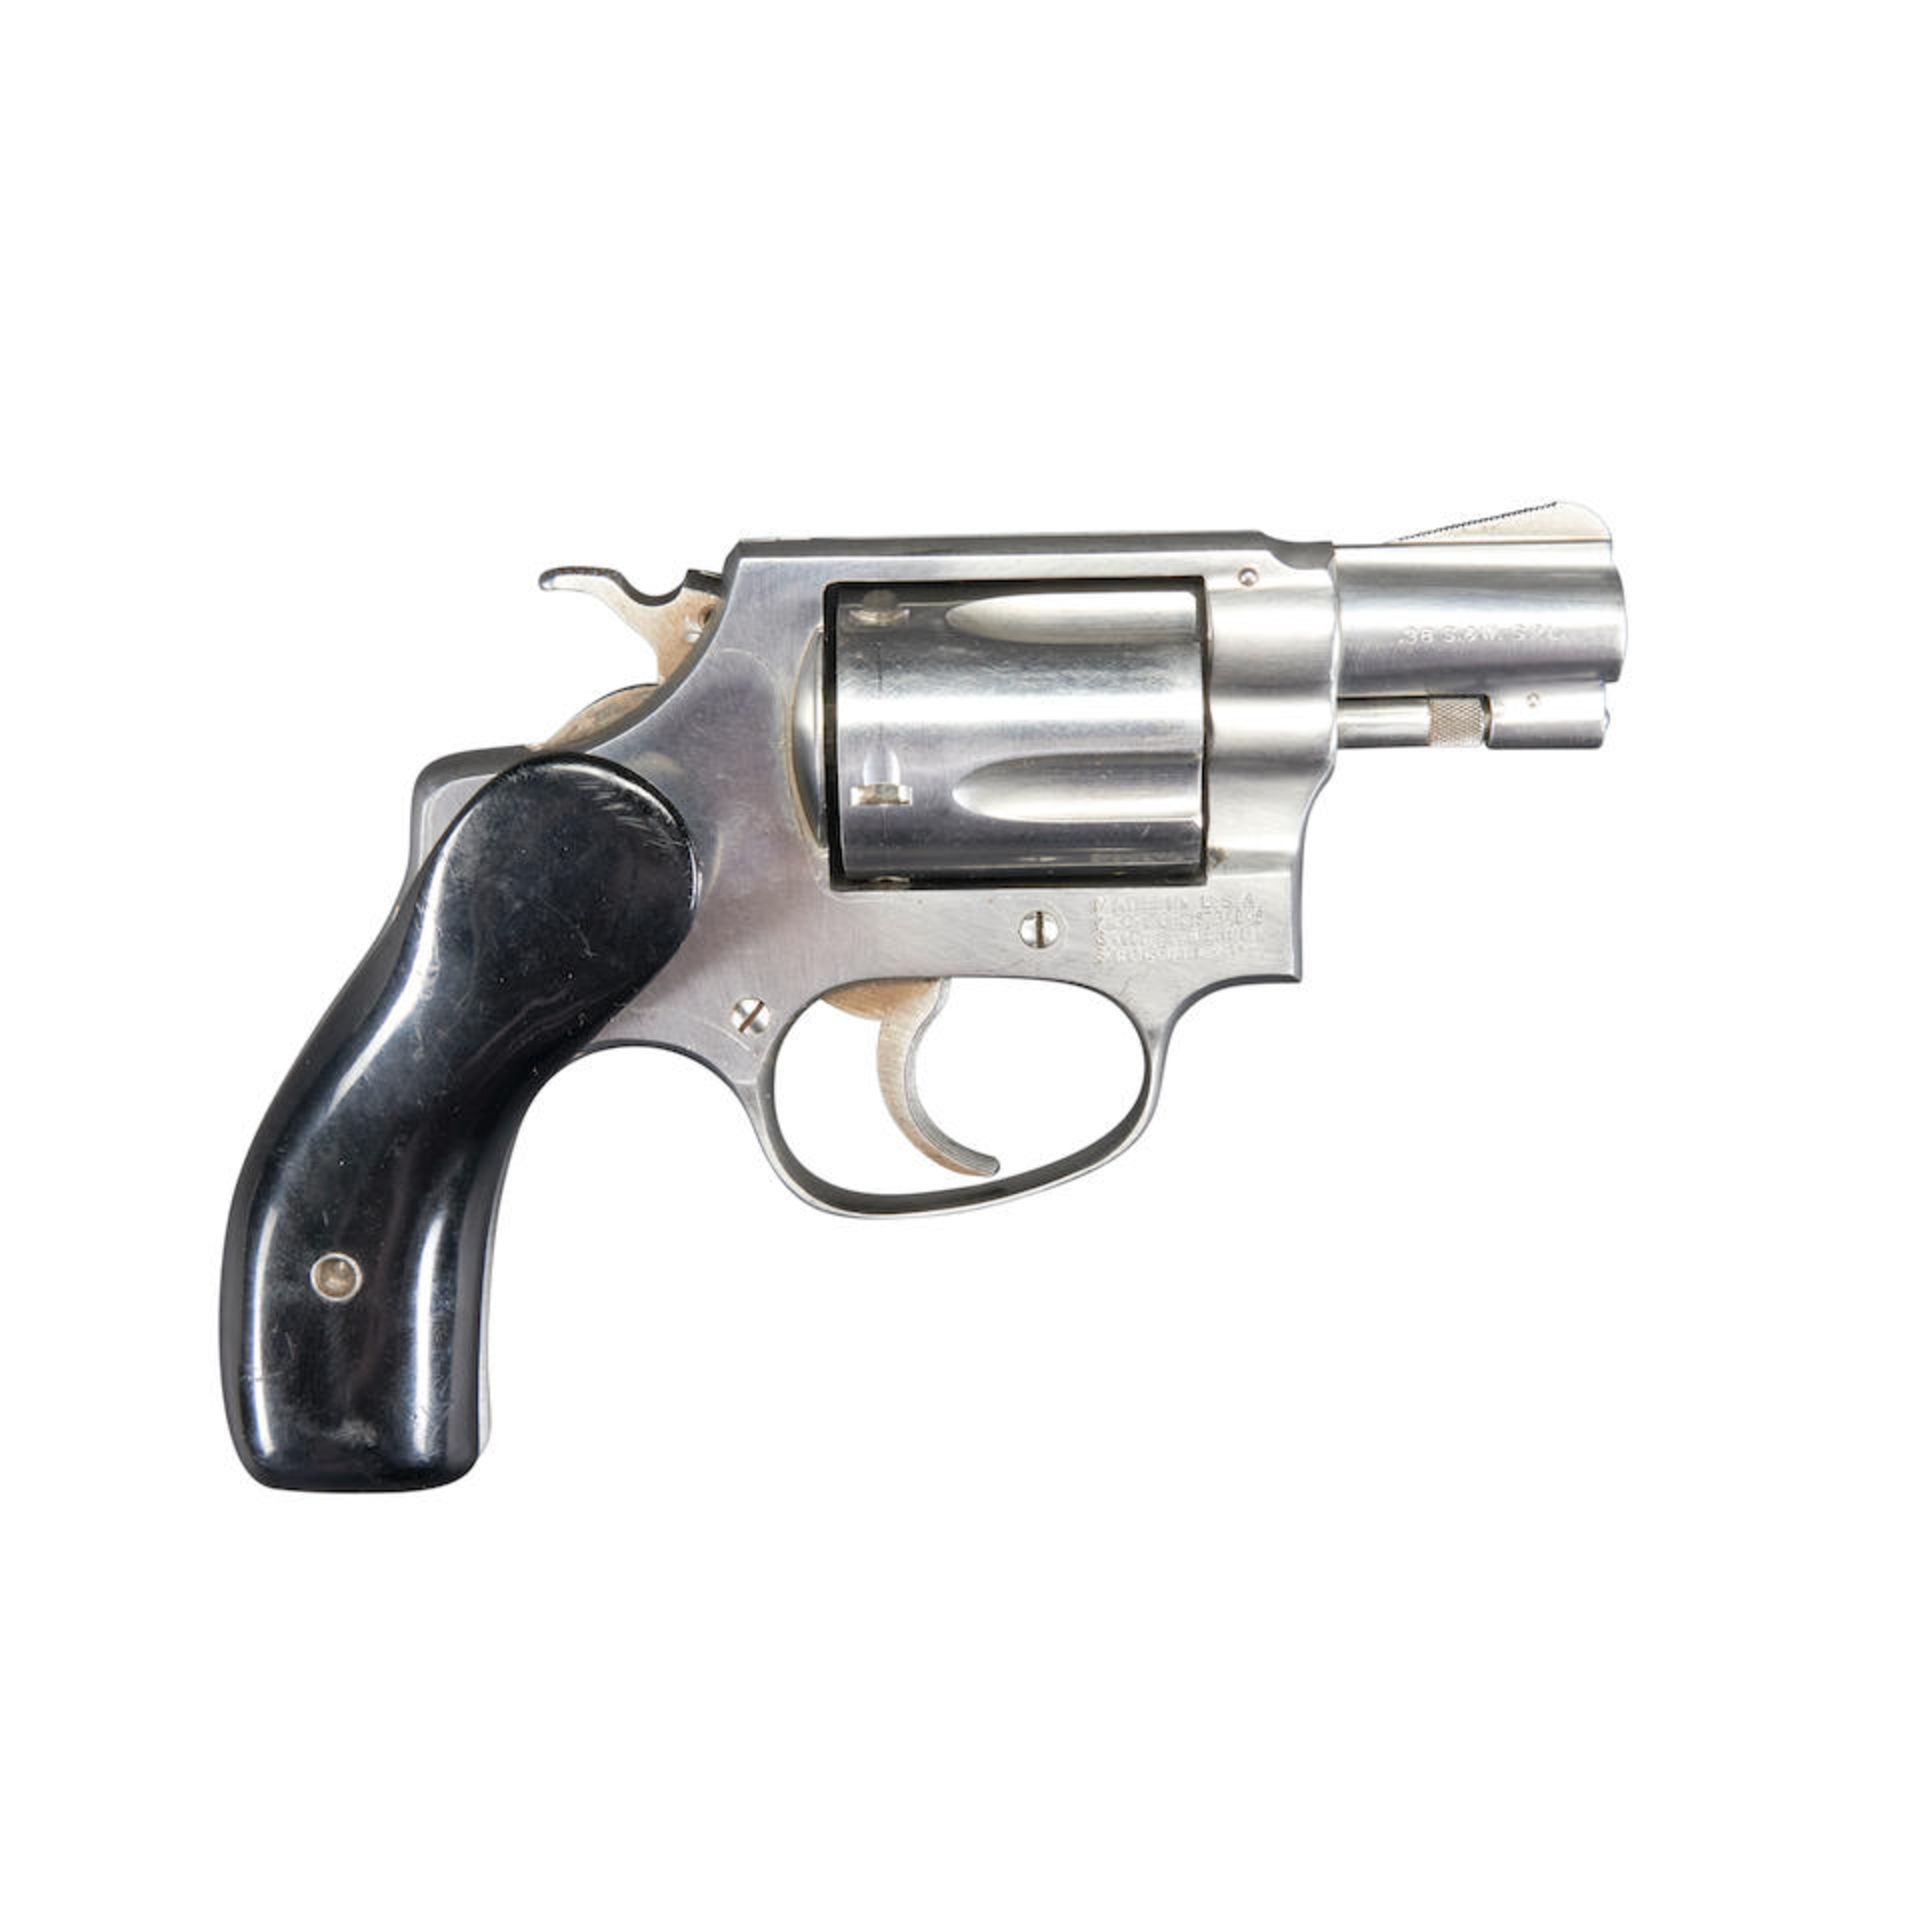 Smith & Wesson Model 60 Double Action Revolver, Curio or Relic firearm